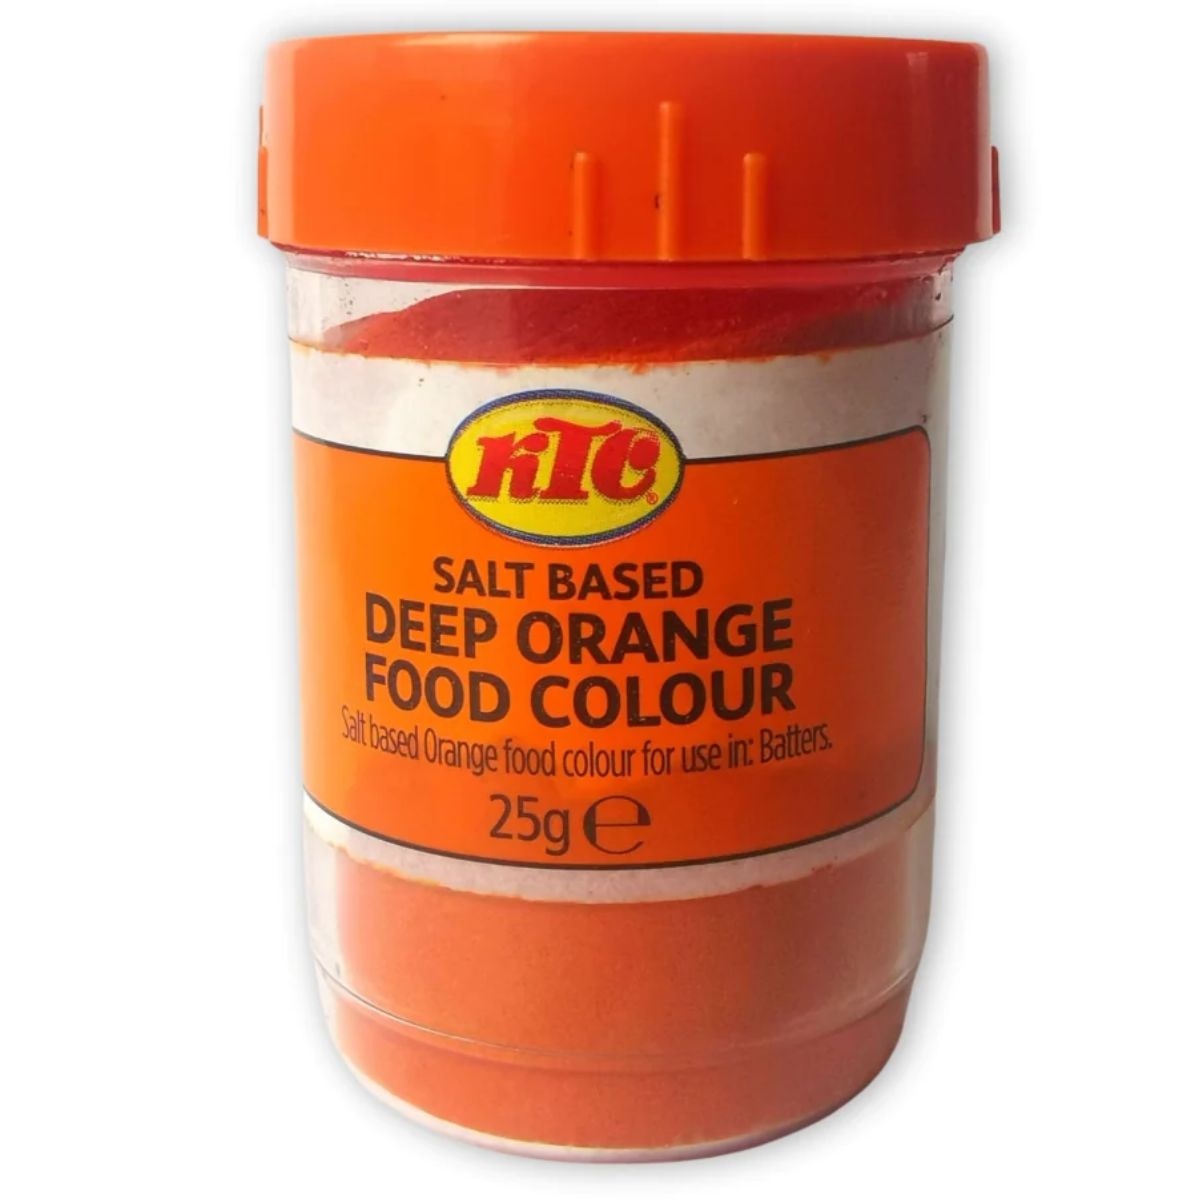 Container of KTC - Salt Based Deep Orange Food Colour - 25g.